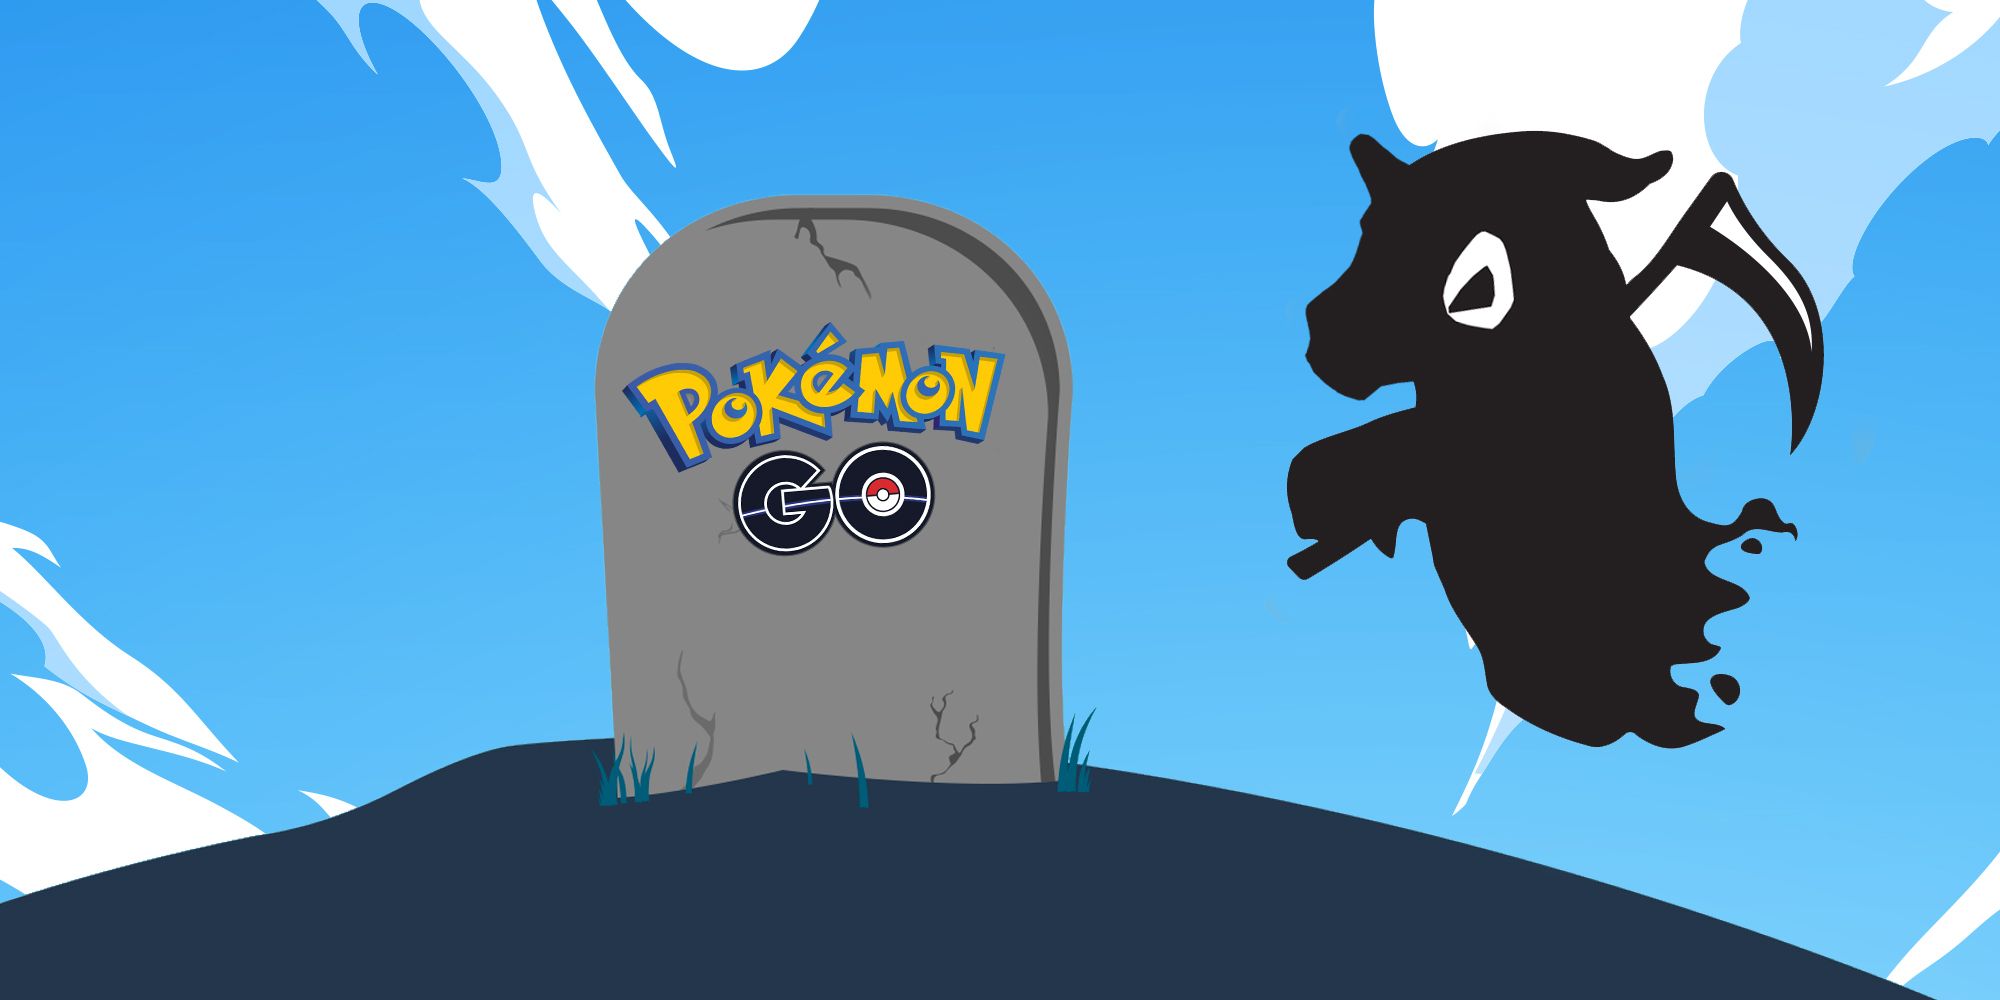 Rest In Peace, Pokemon Go